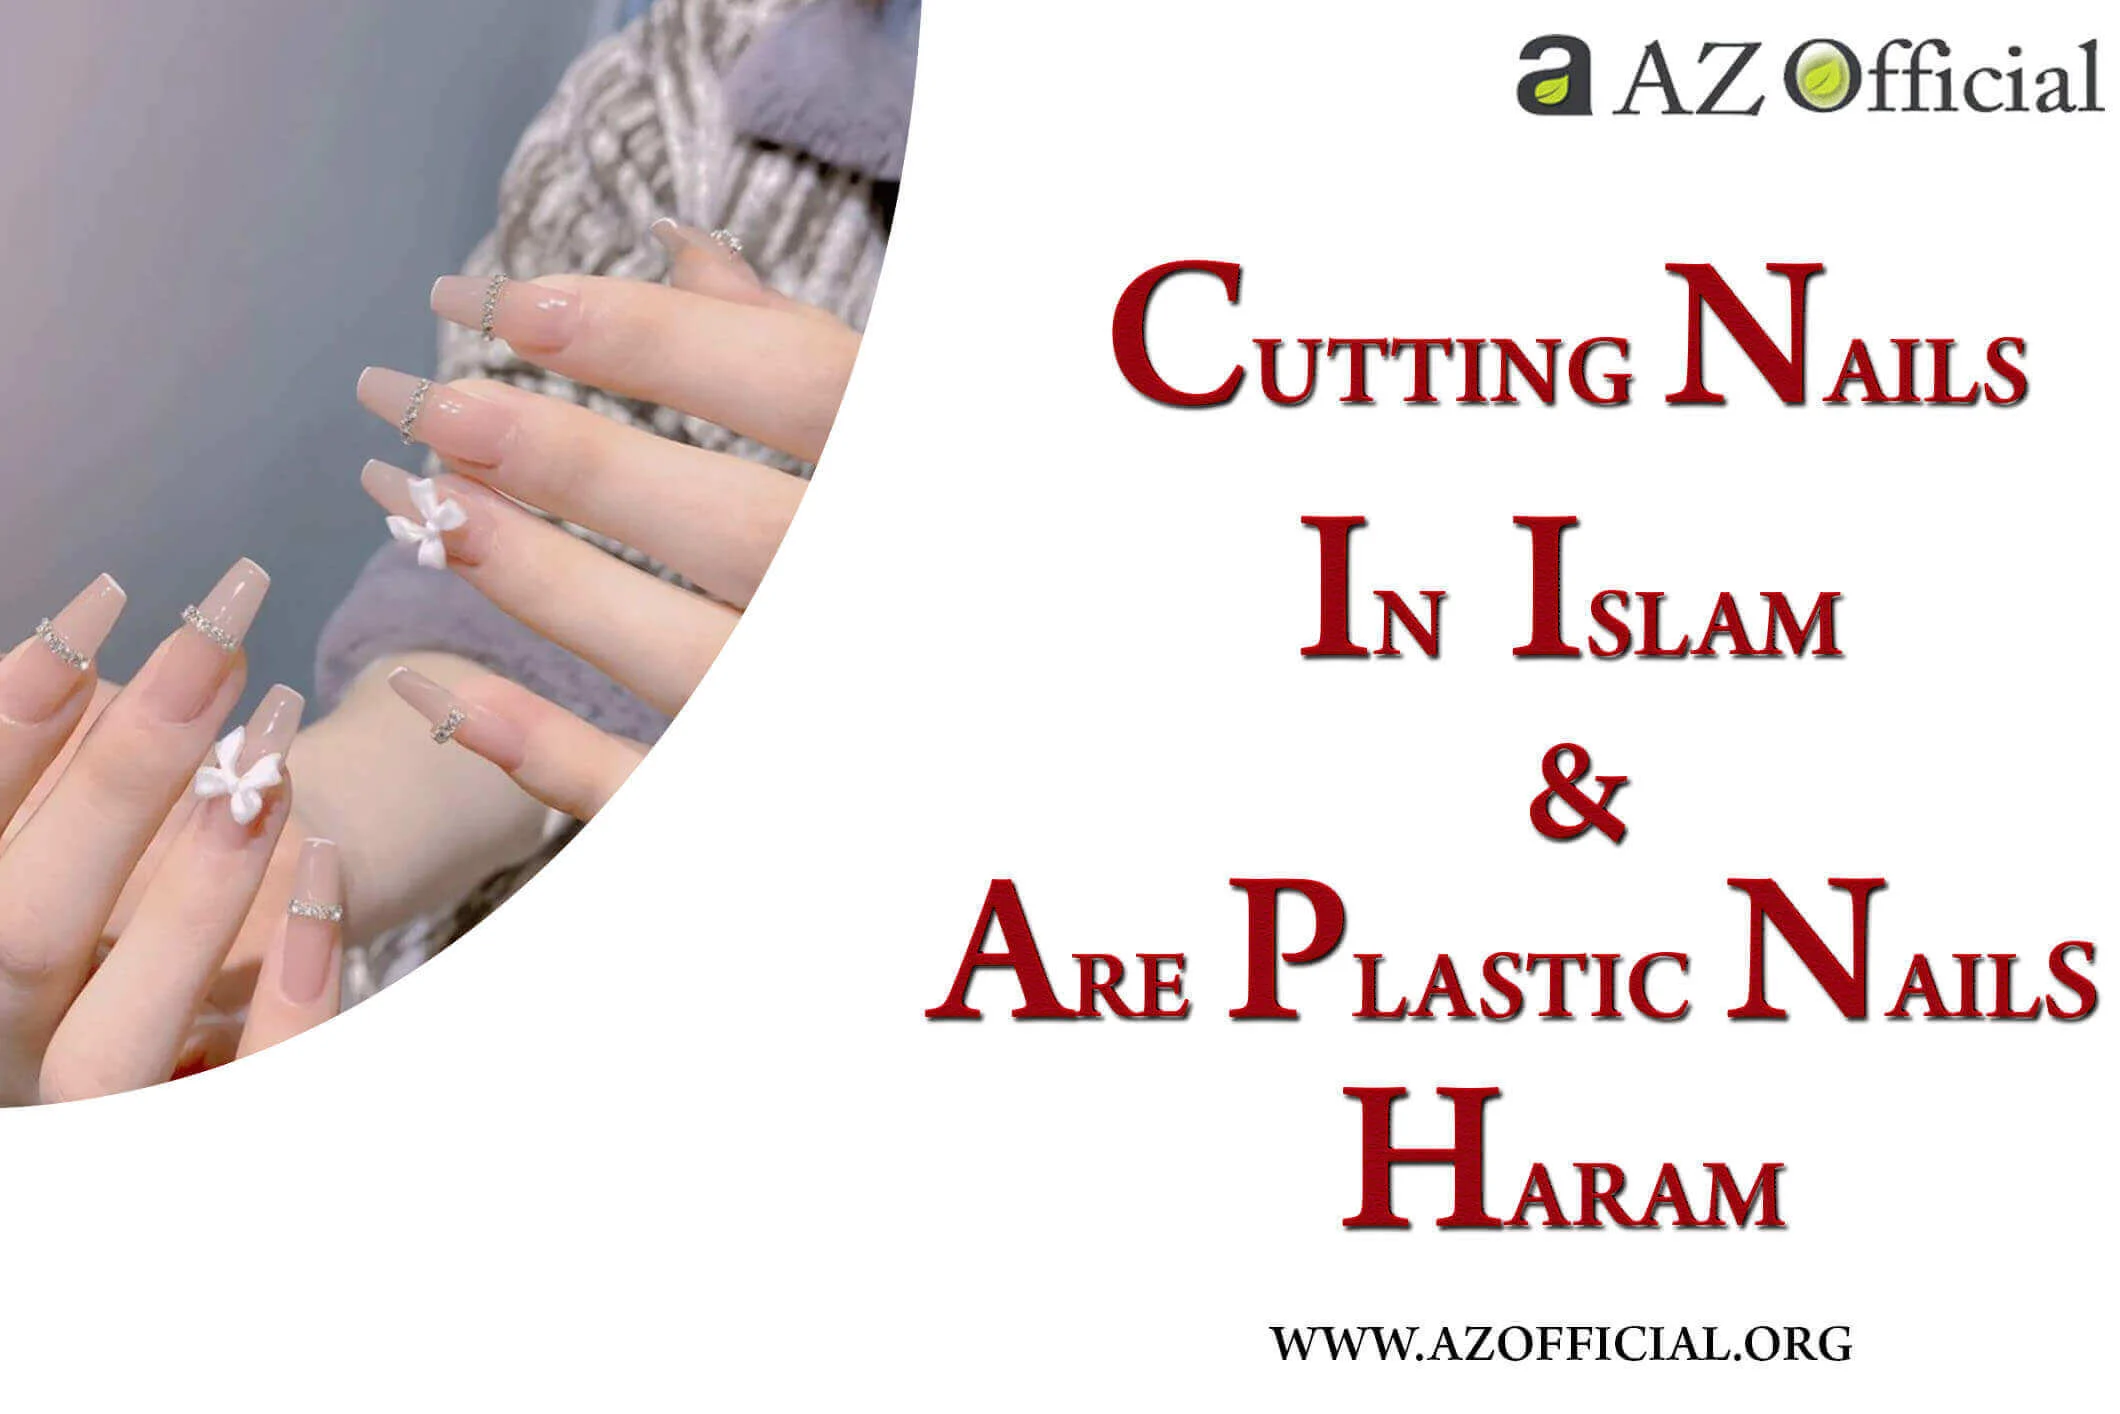 Cutting nails in Islam